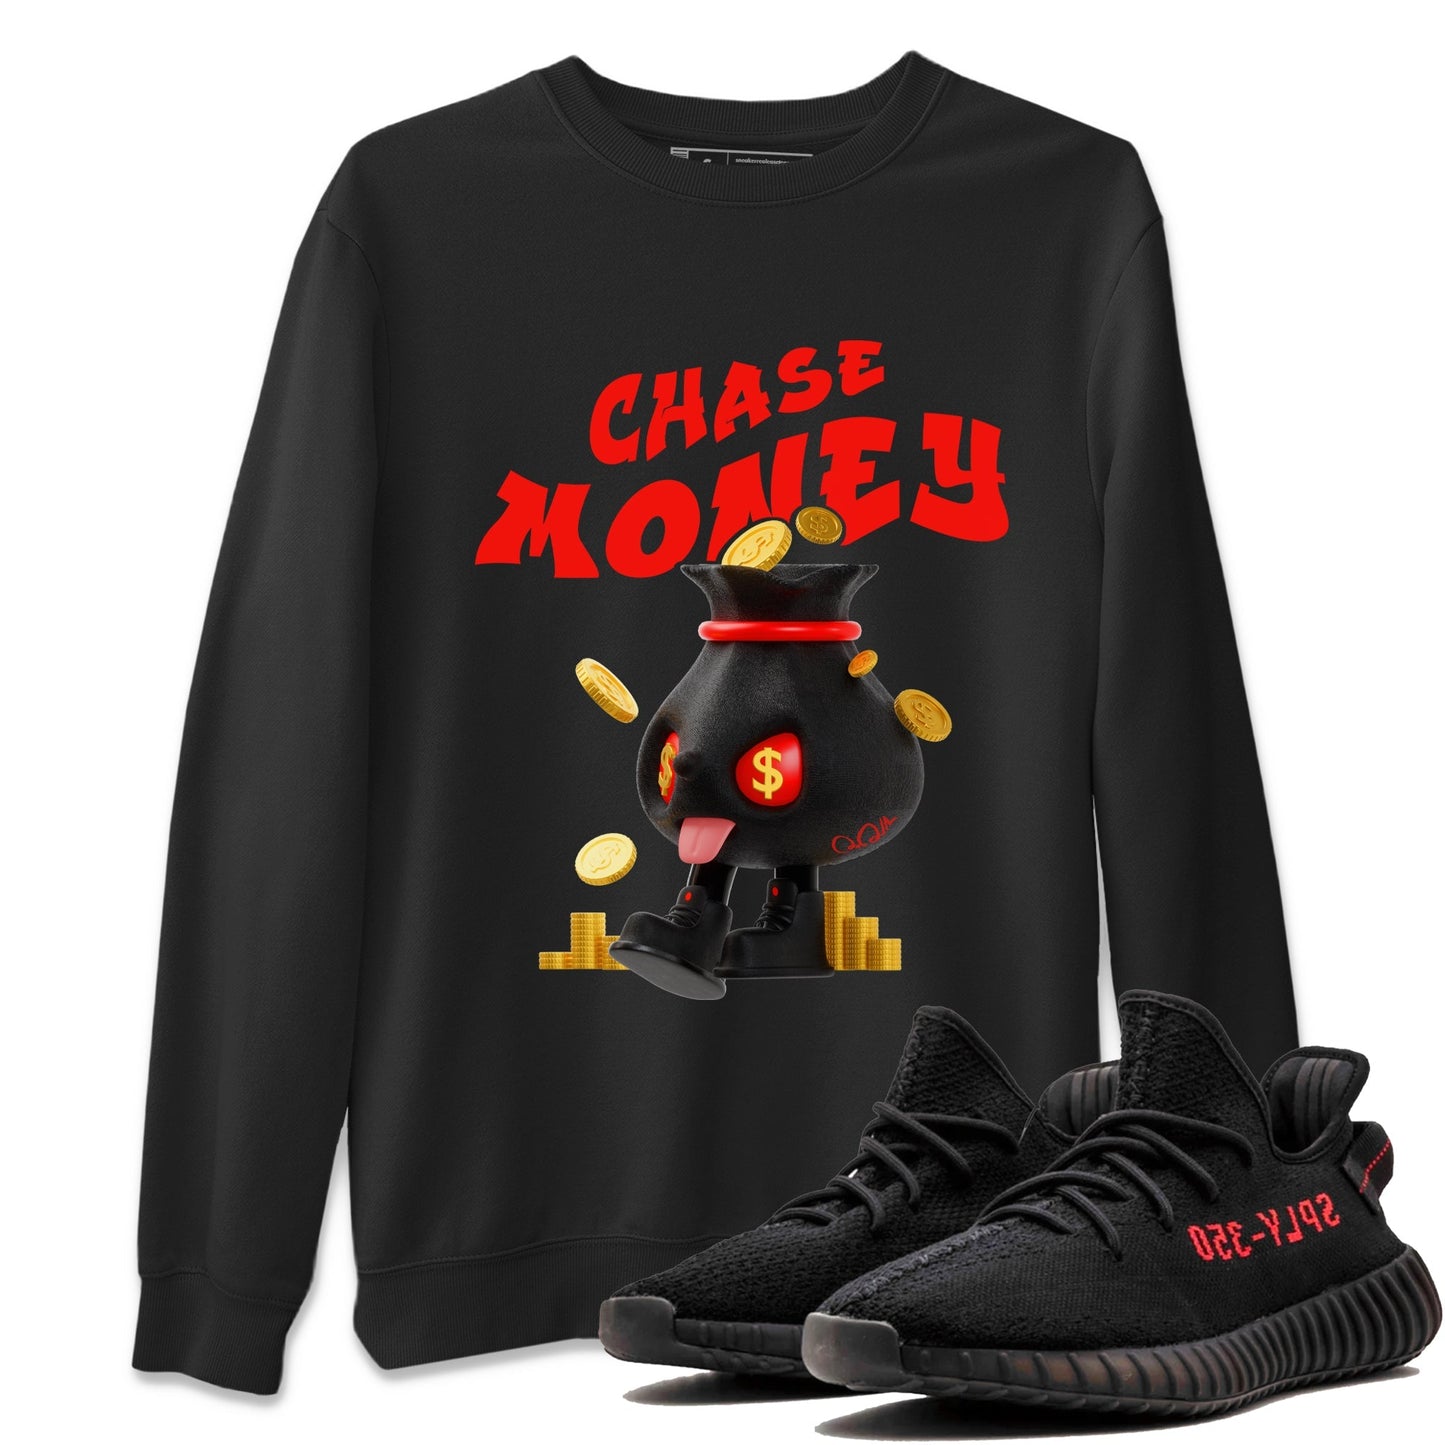 Yeezy 350 Bred shirt to match jordans Chase Money Streetwear Sneaker Shirt Adidas Yeezy 350 V2 Boost Bred Drip Gear Zone Sneaker Matching Clothing Unisex Black 1 T-Shirt